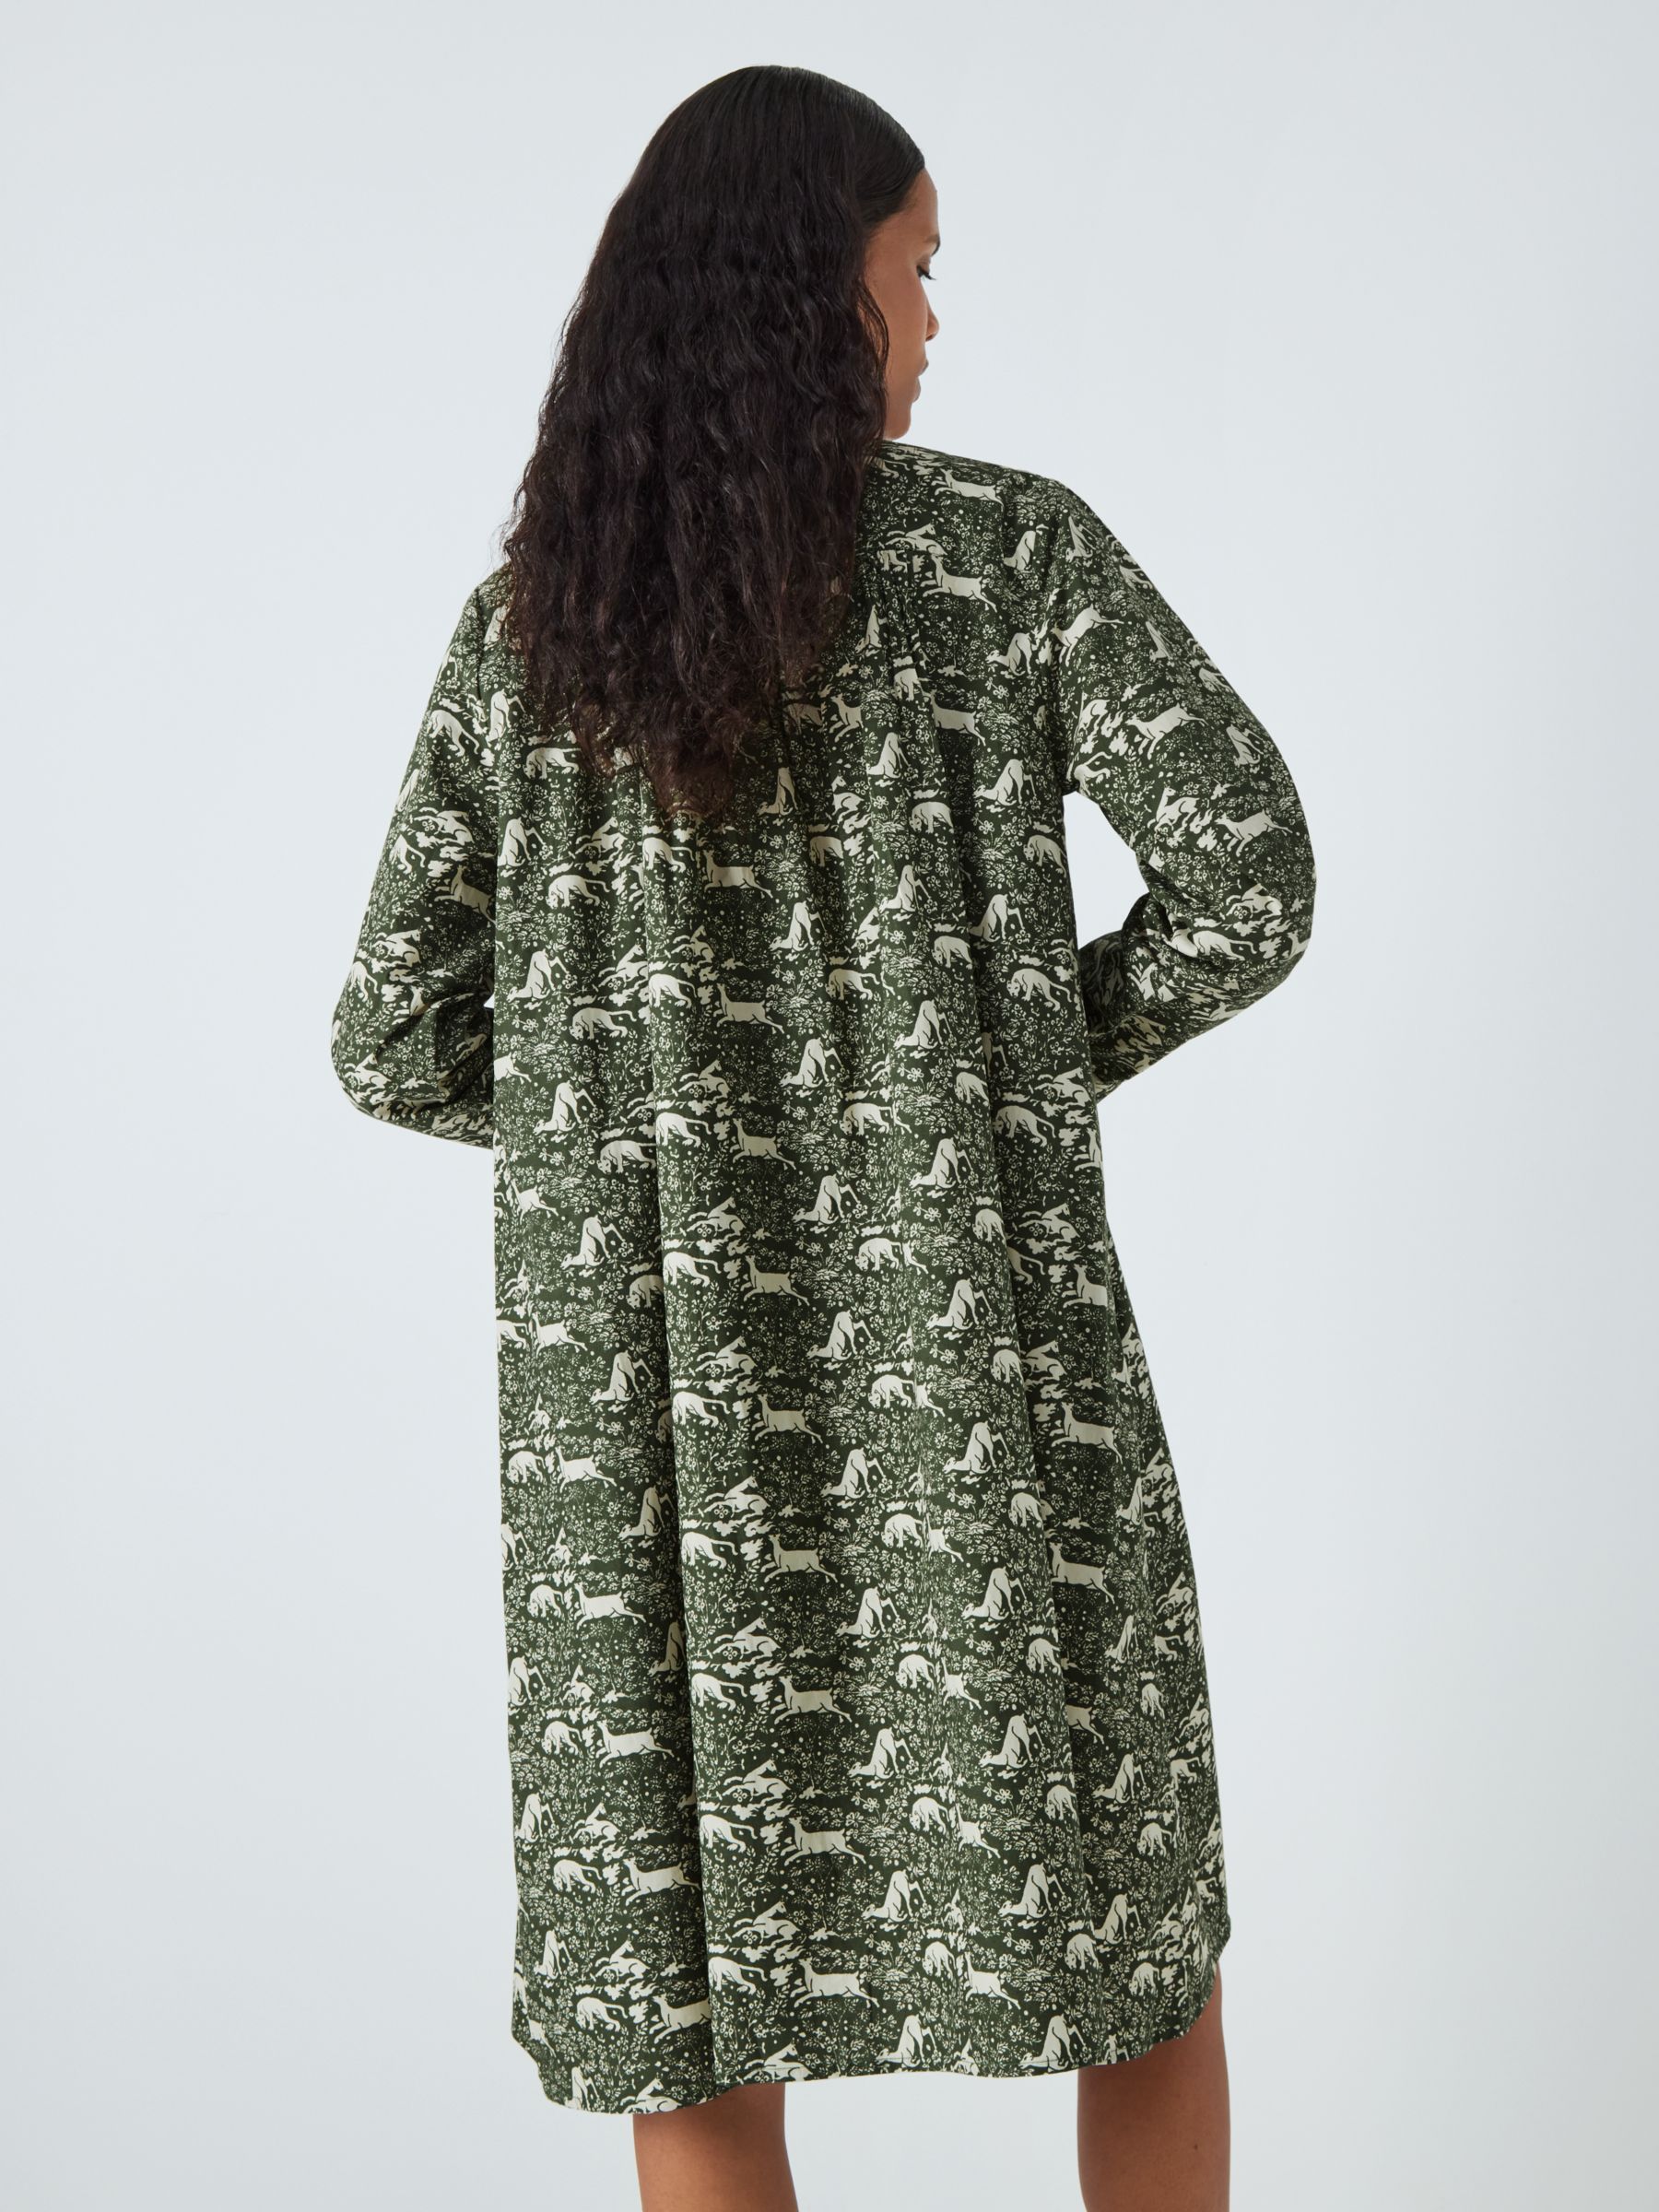 Batsheva x Laura Ashley Cumbria Abercastle Print Dress, Green/Multi, 10